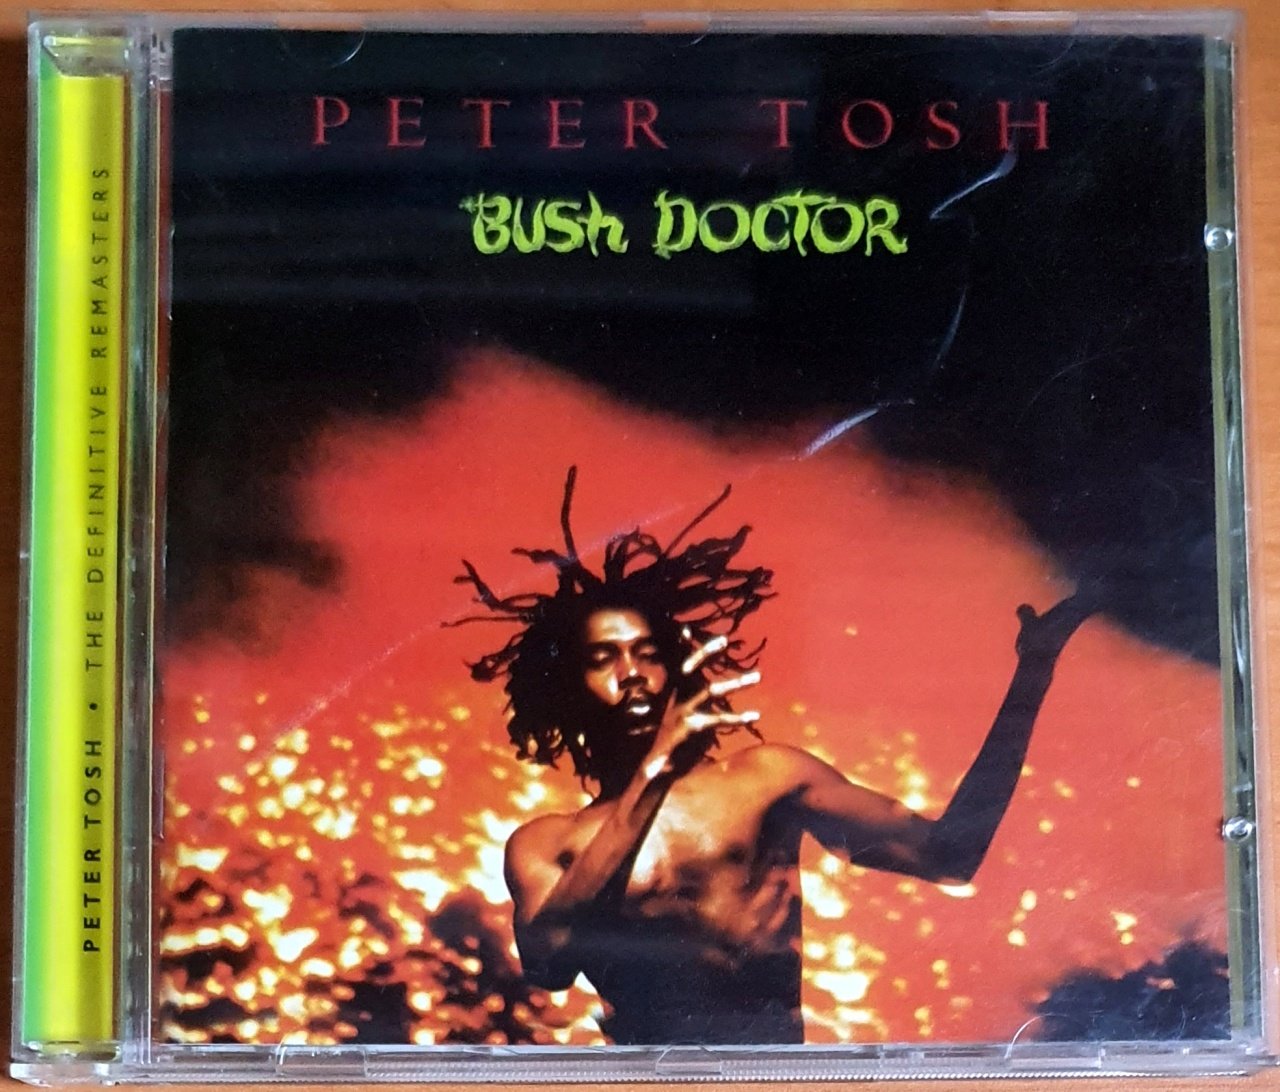 PETER TOSH - BUSH DOCTOR (1978) - CD 2002 REMASTERED REISSUE 2.EL